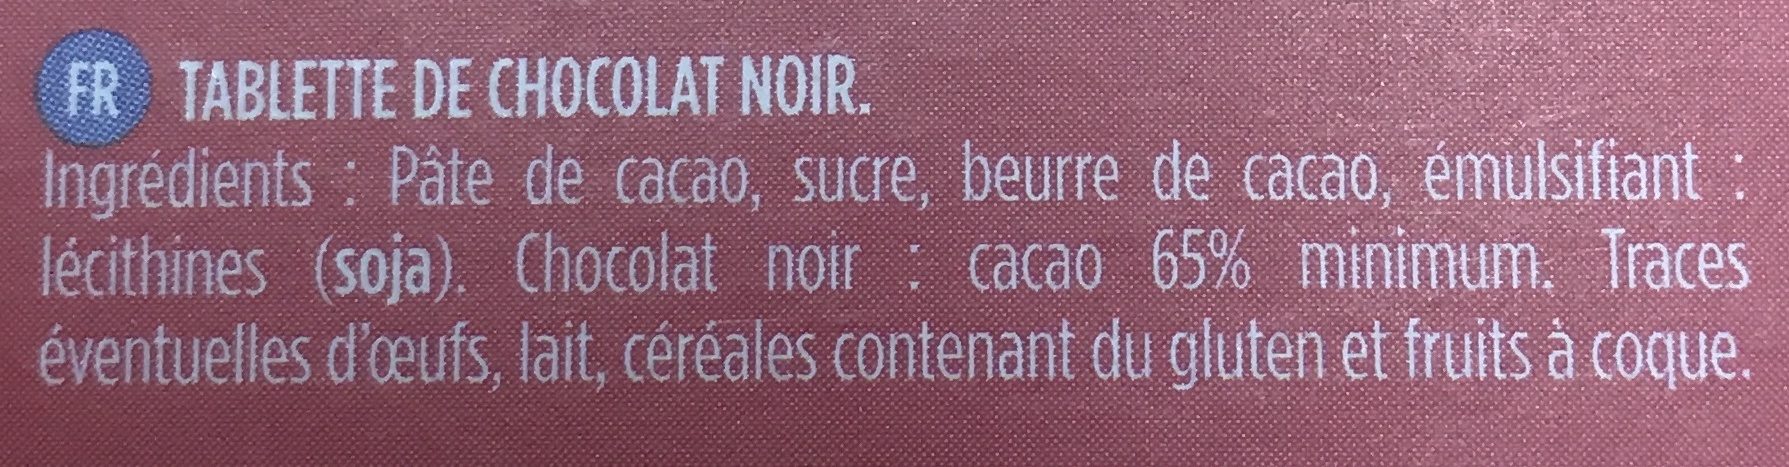 NOIR 65% CACAO - Ingredients - fr